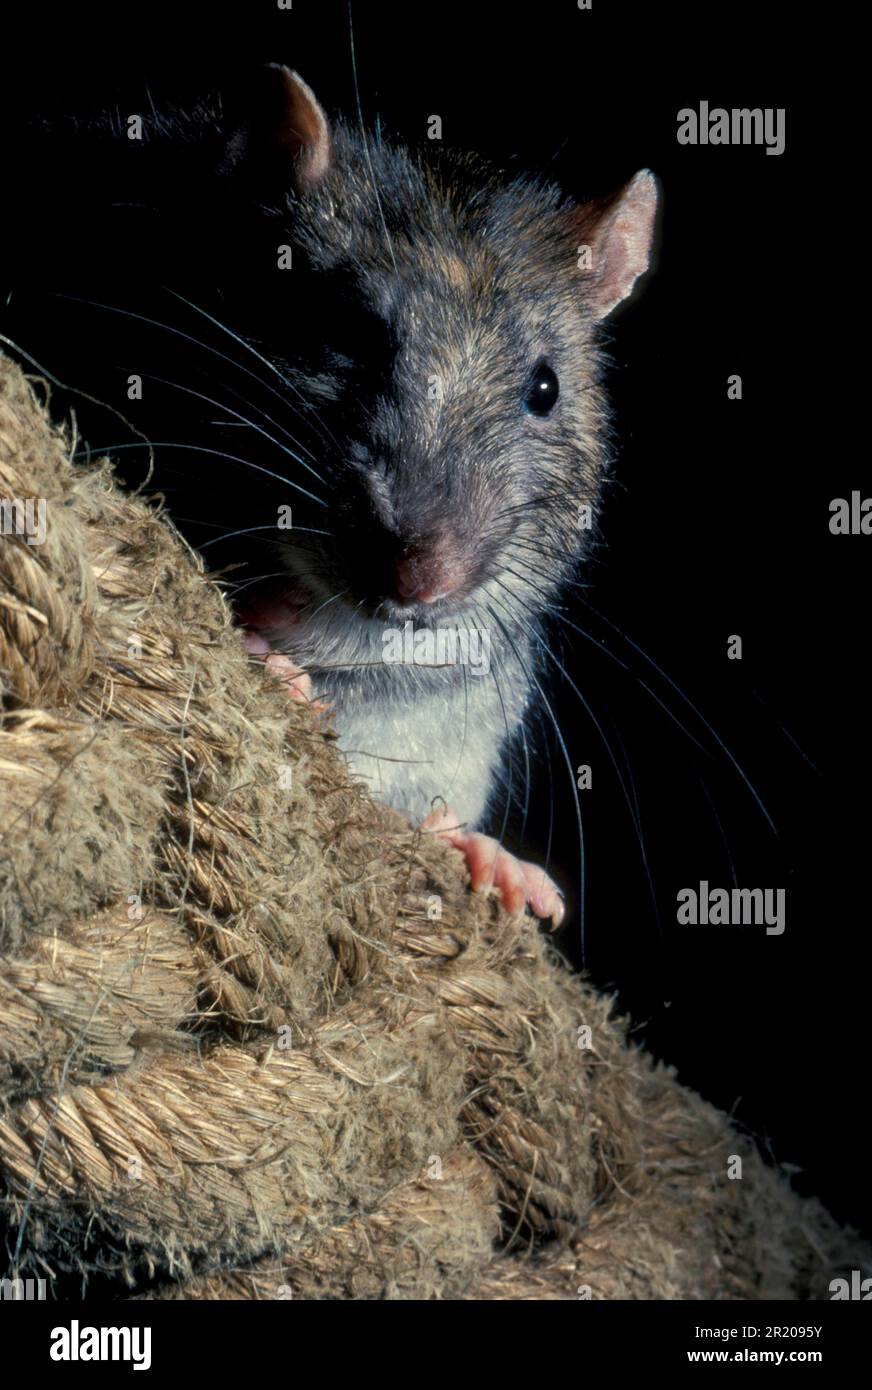 Norway rat, Norway rats, rodents, rat, rats, mammals, animals, RatBrown (Rattus norwegicus) close-up of head, rope Stock Photo